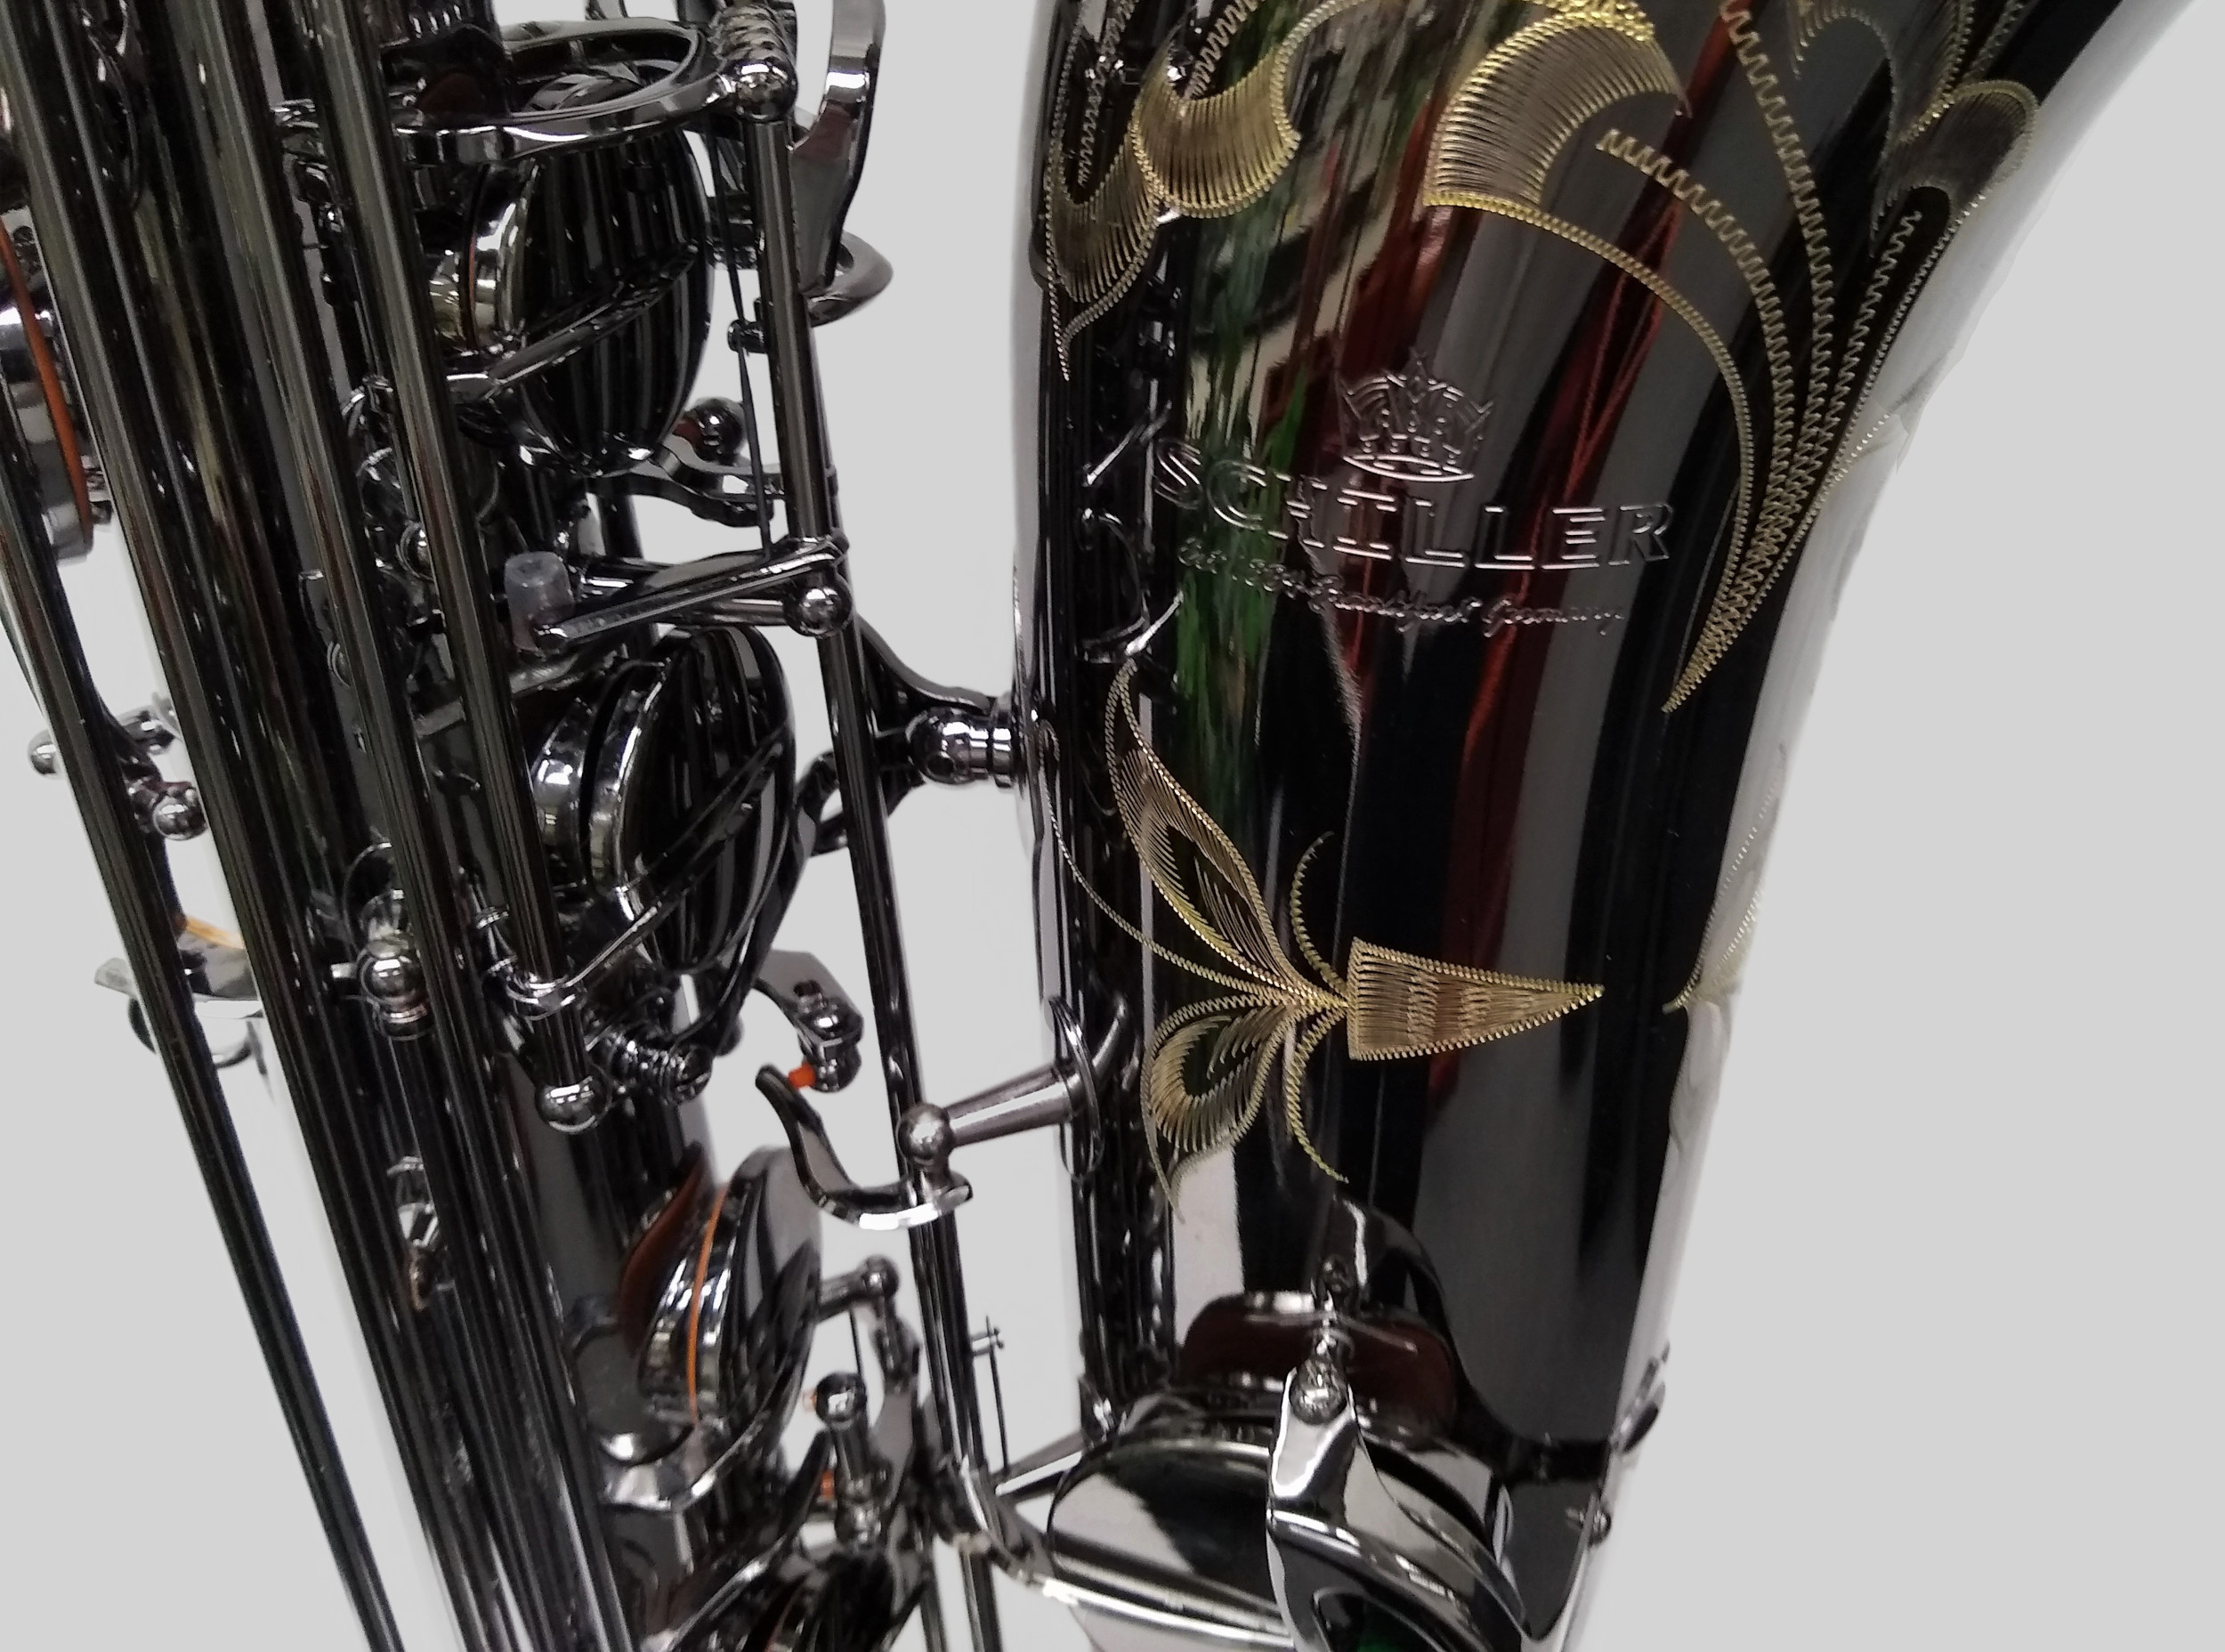 Elite V Baritone Saxophone Black Nickel